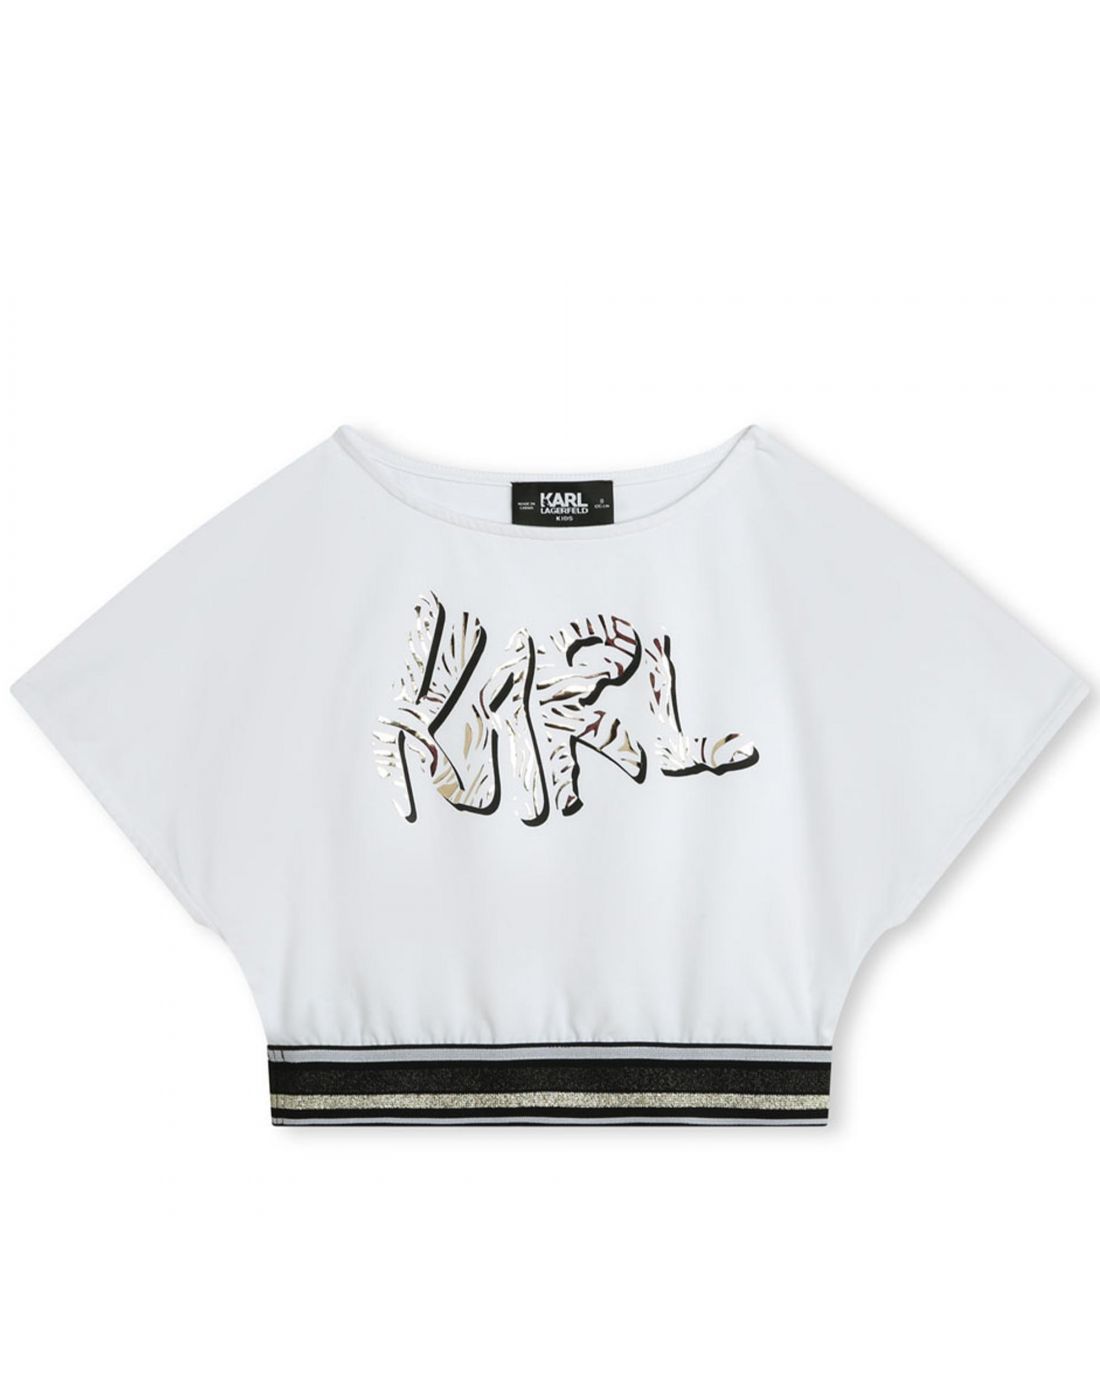 Karl Lagerfeld GirlsT-shirt